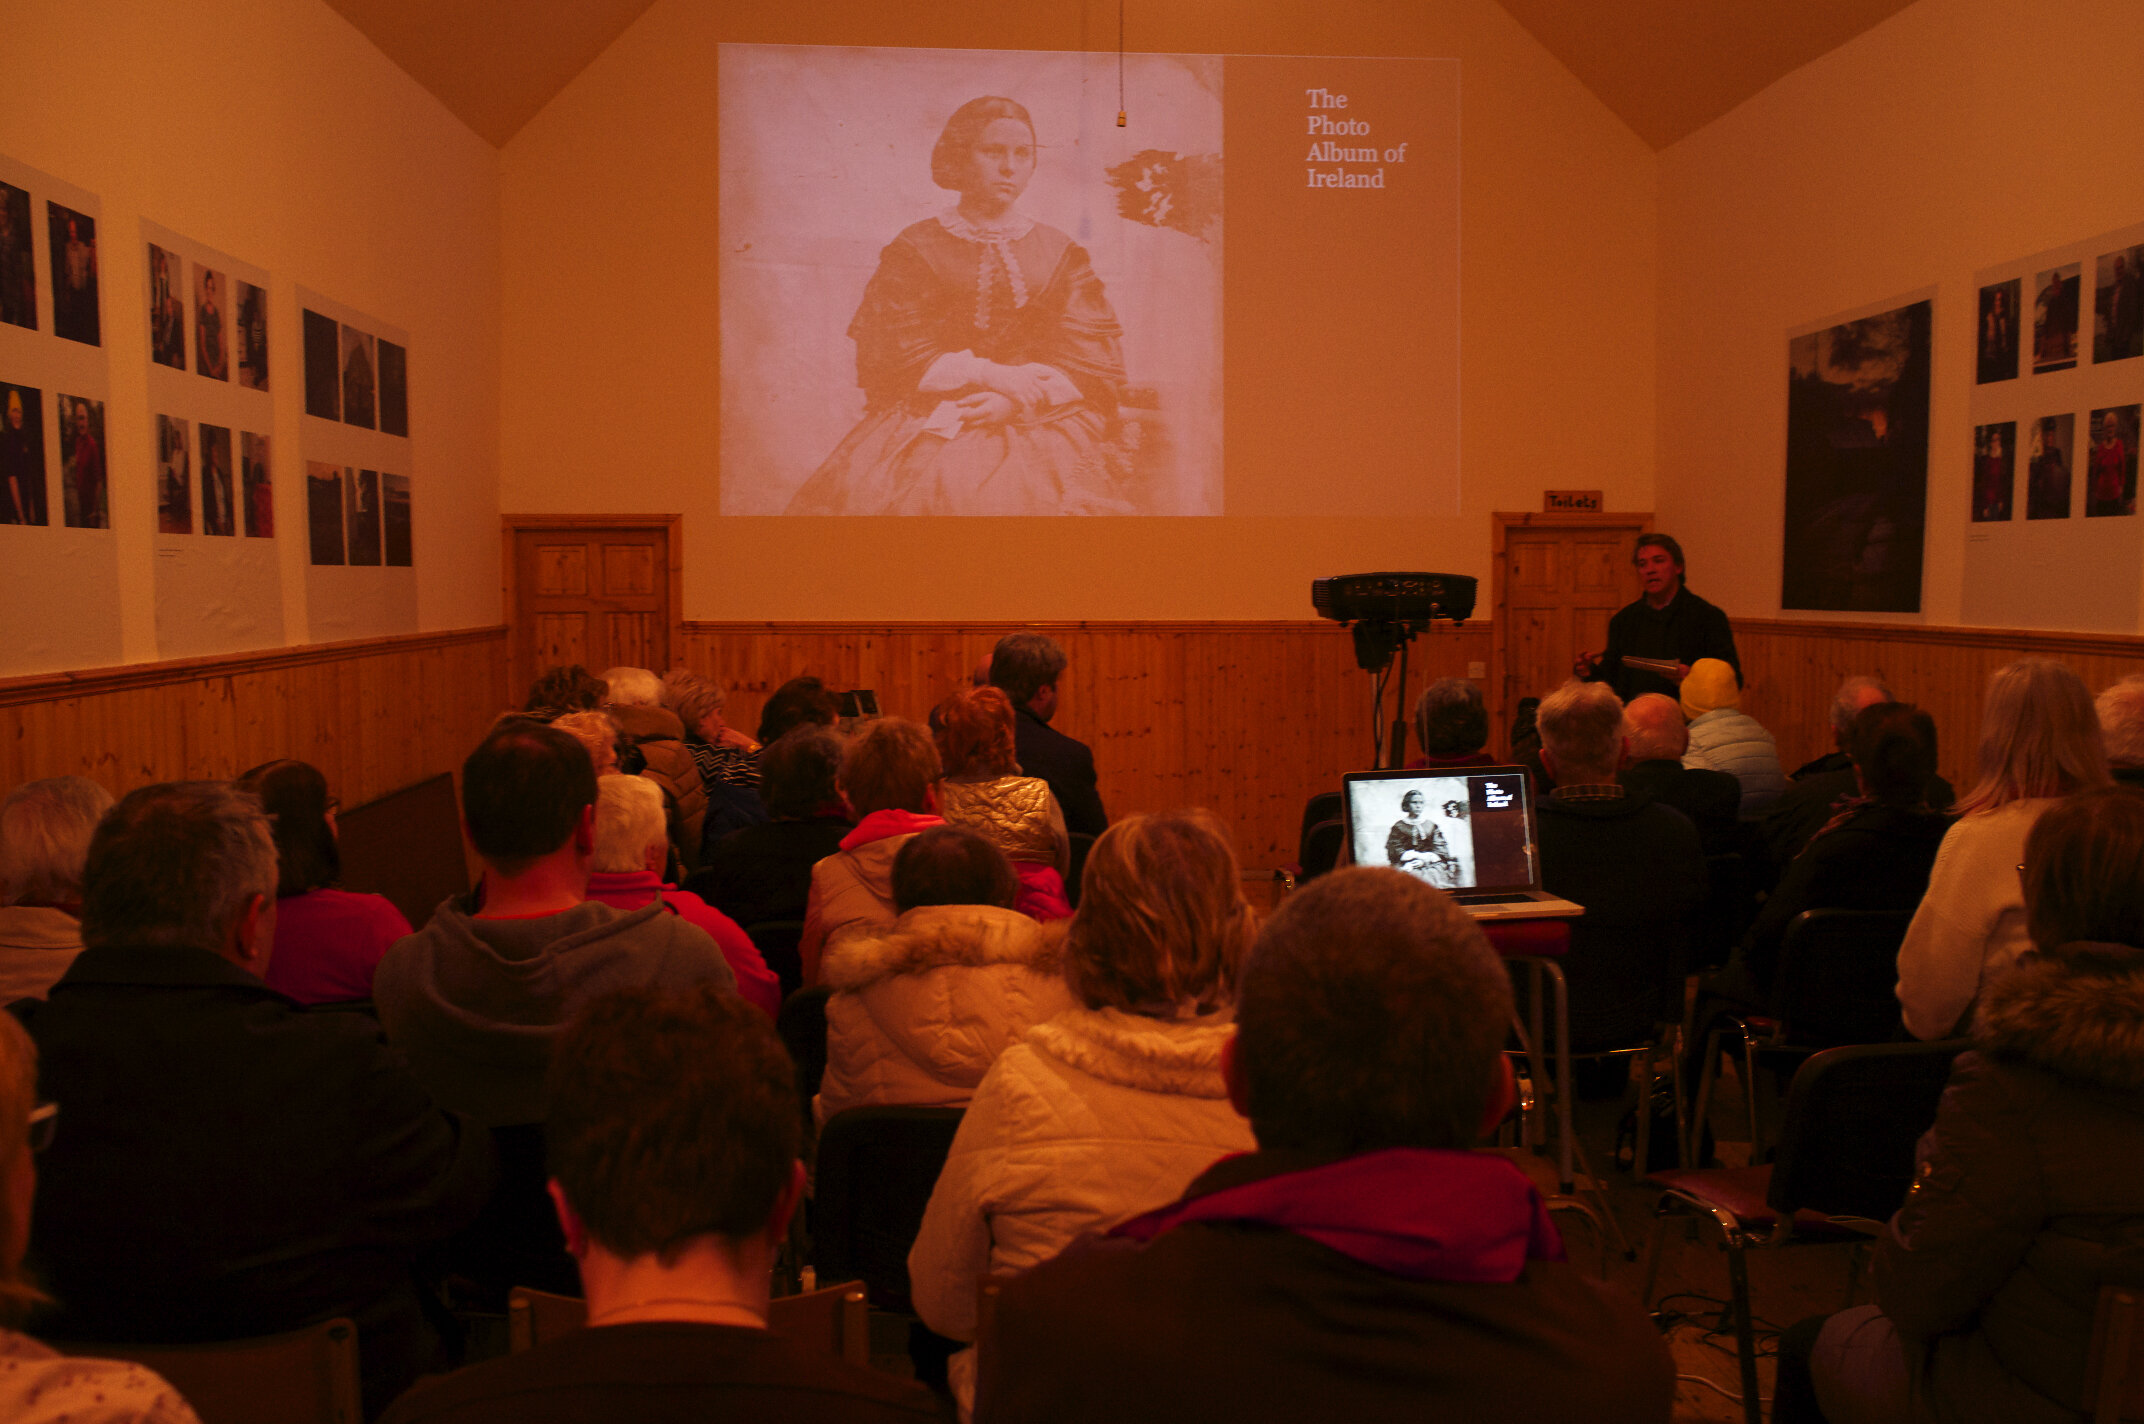  Architectural historian Kevin V. Mulligan speaking on the Photo Album of Ireland in Drum 